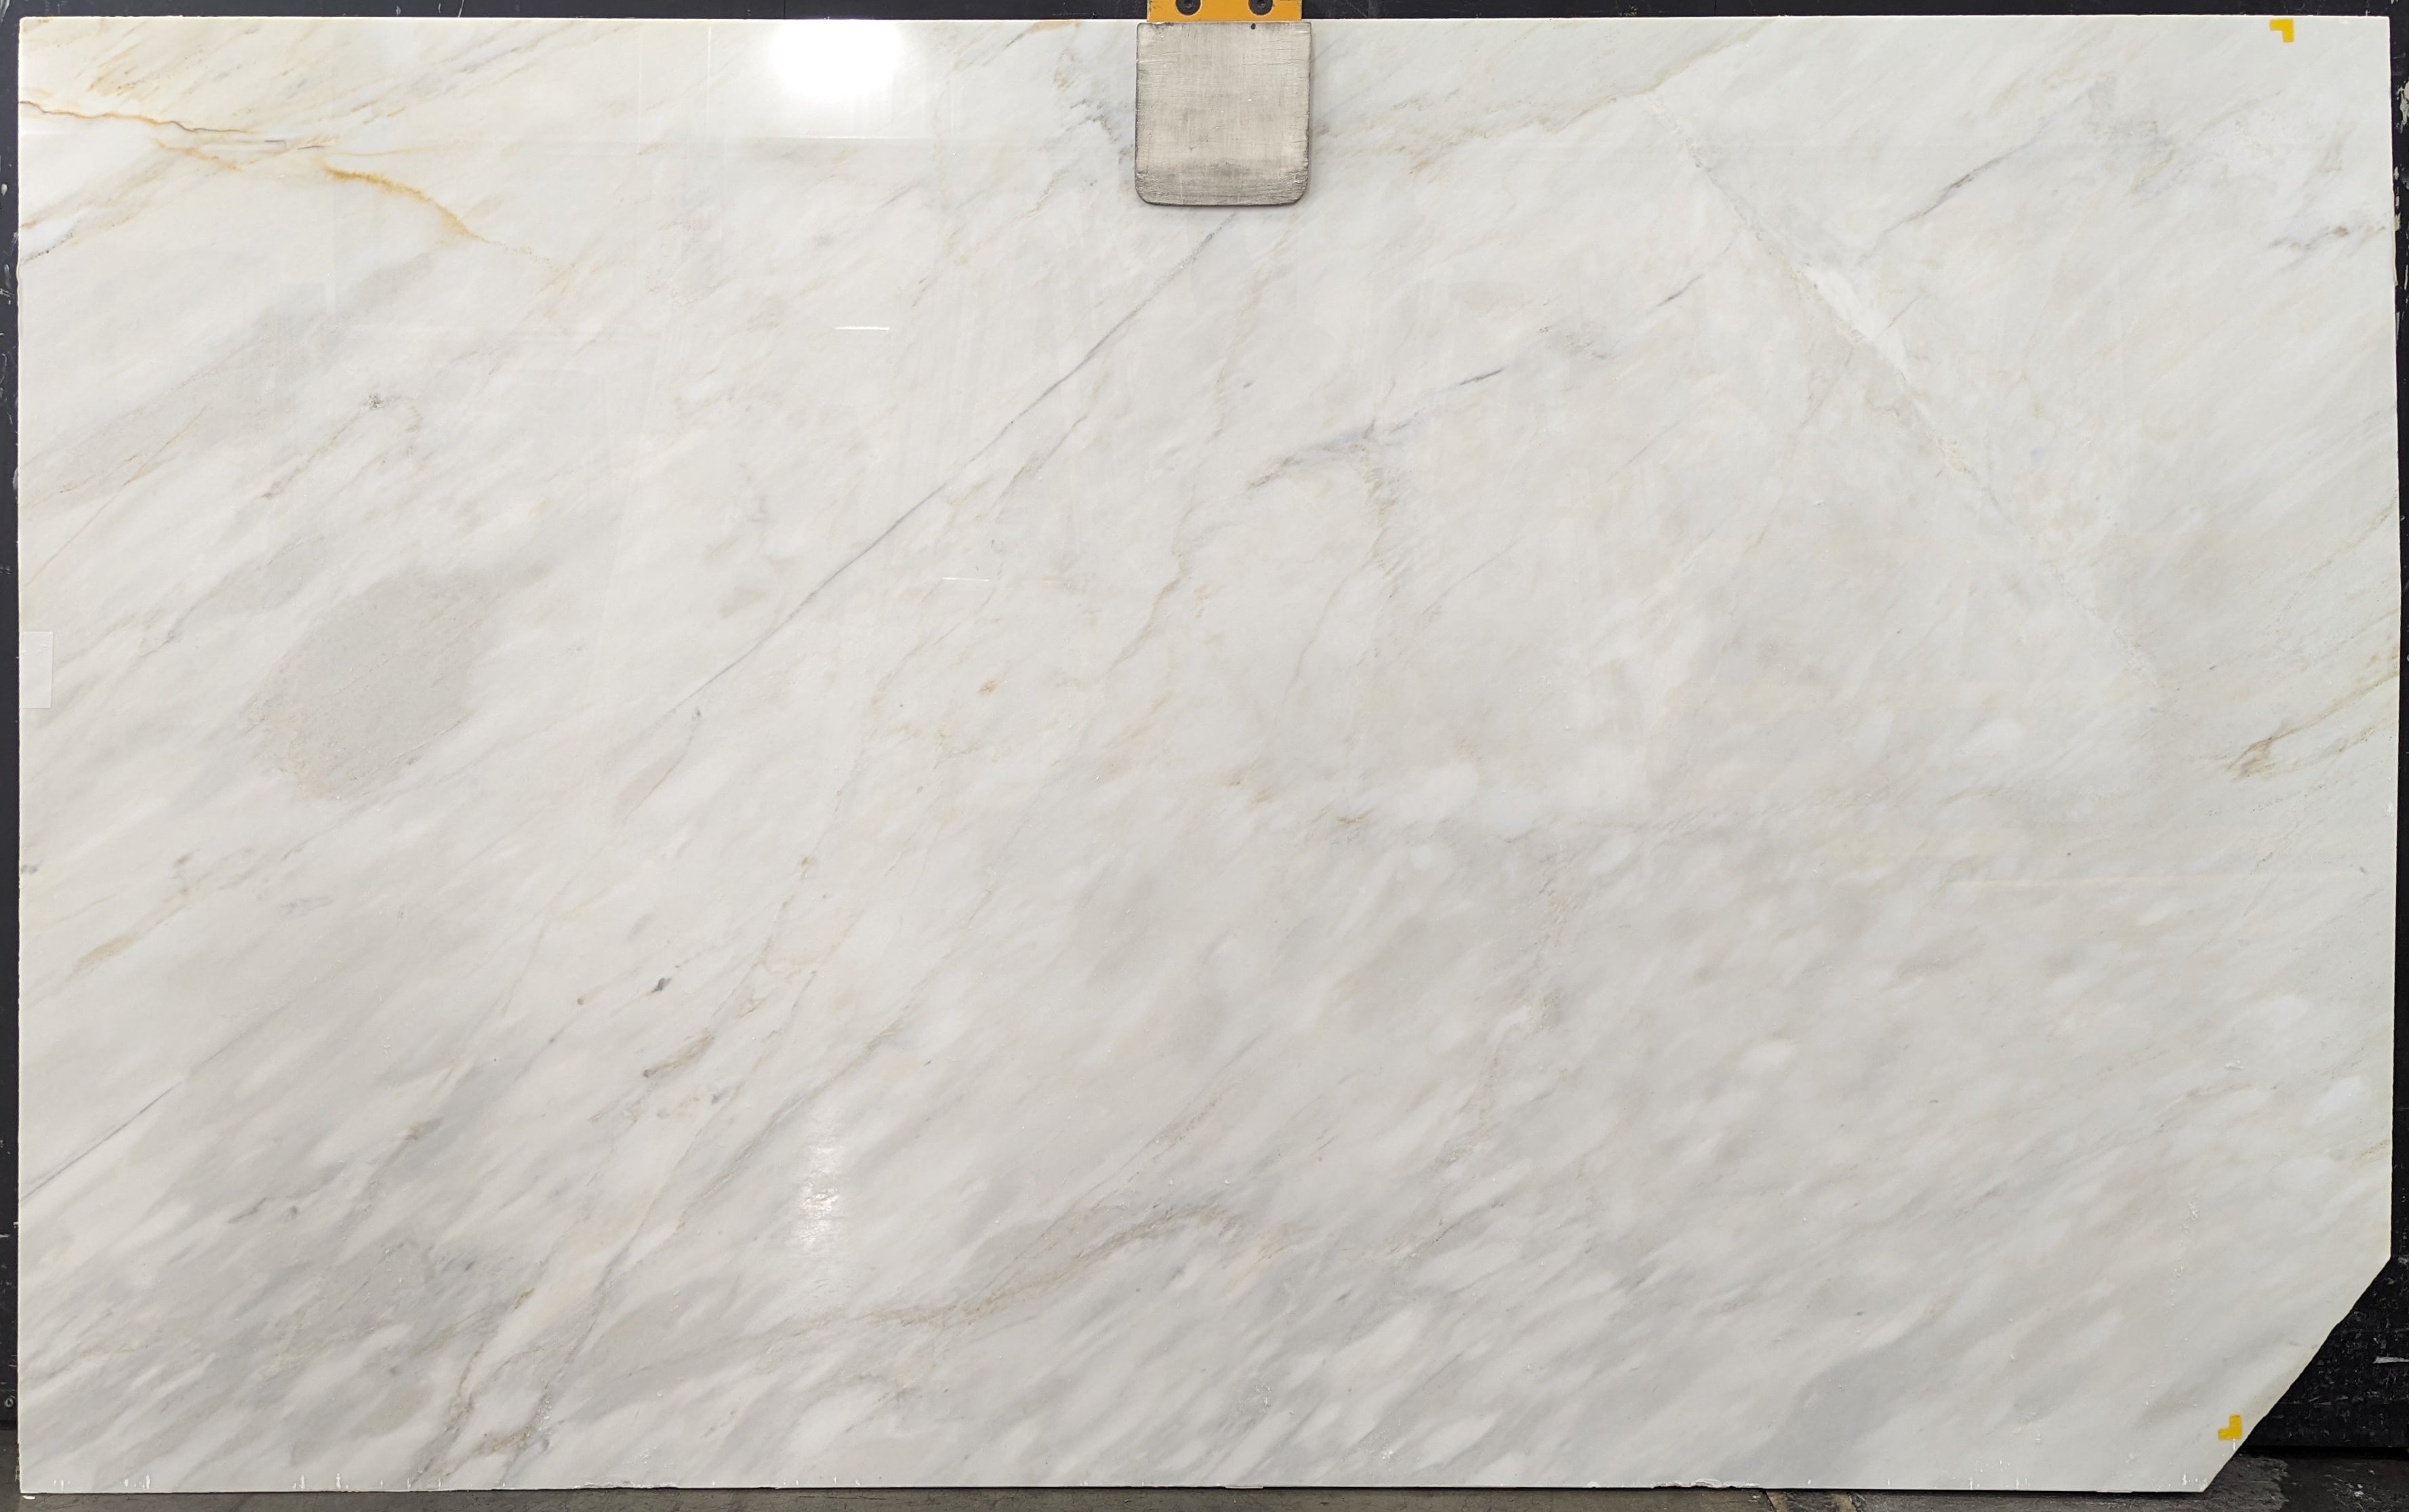  Calacatta Cremo Marble Slab 3/4  Polished Stone - 11726#28 -  68X106 